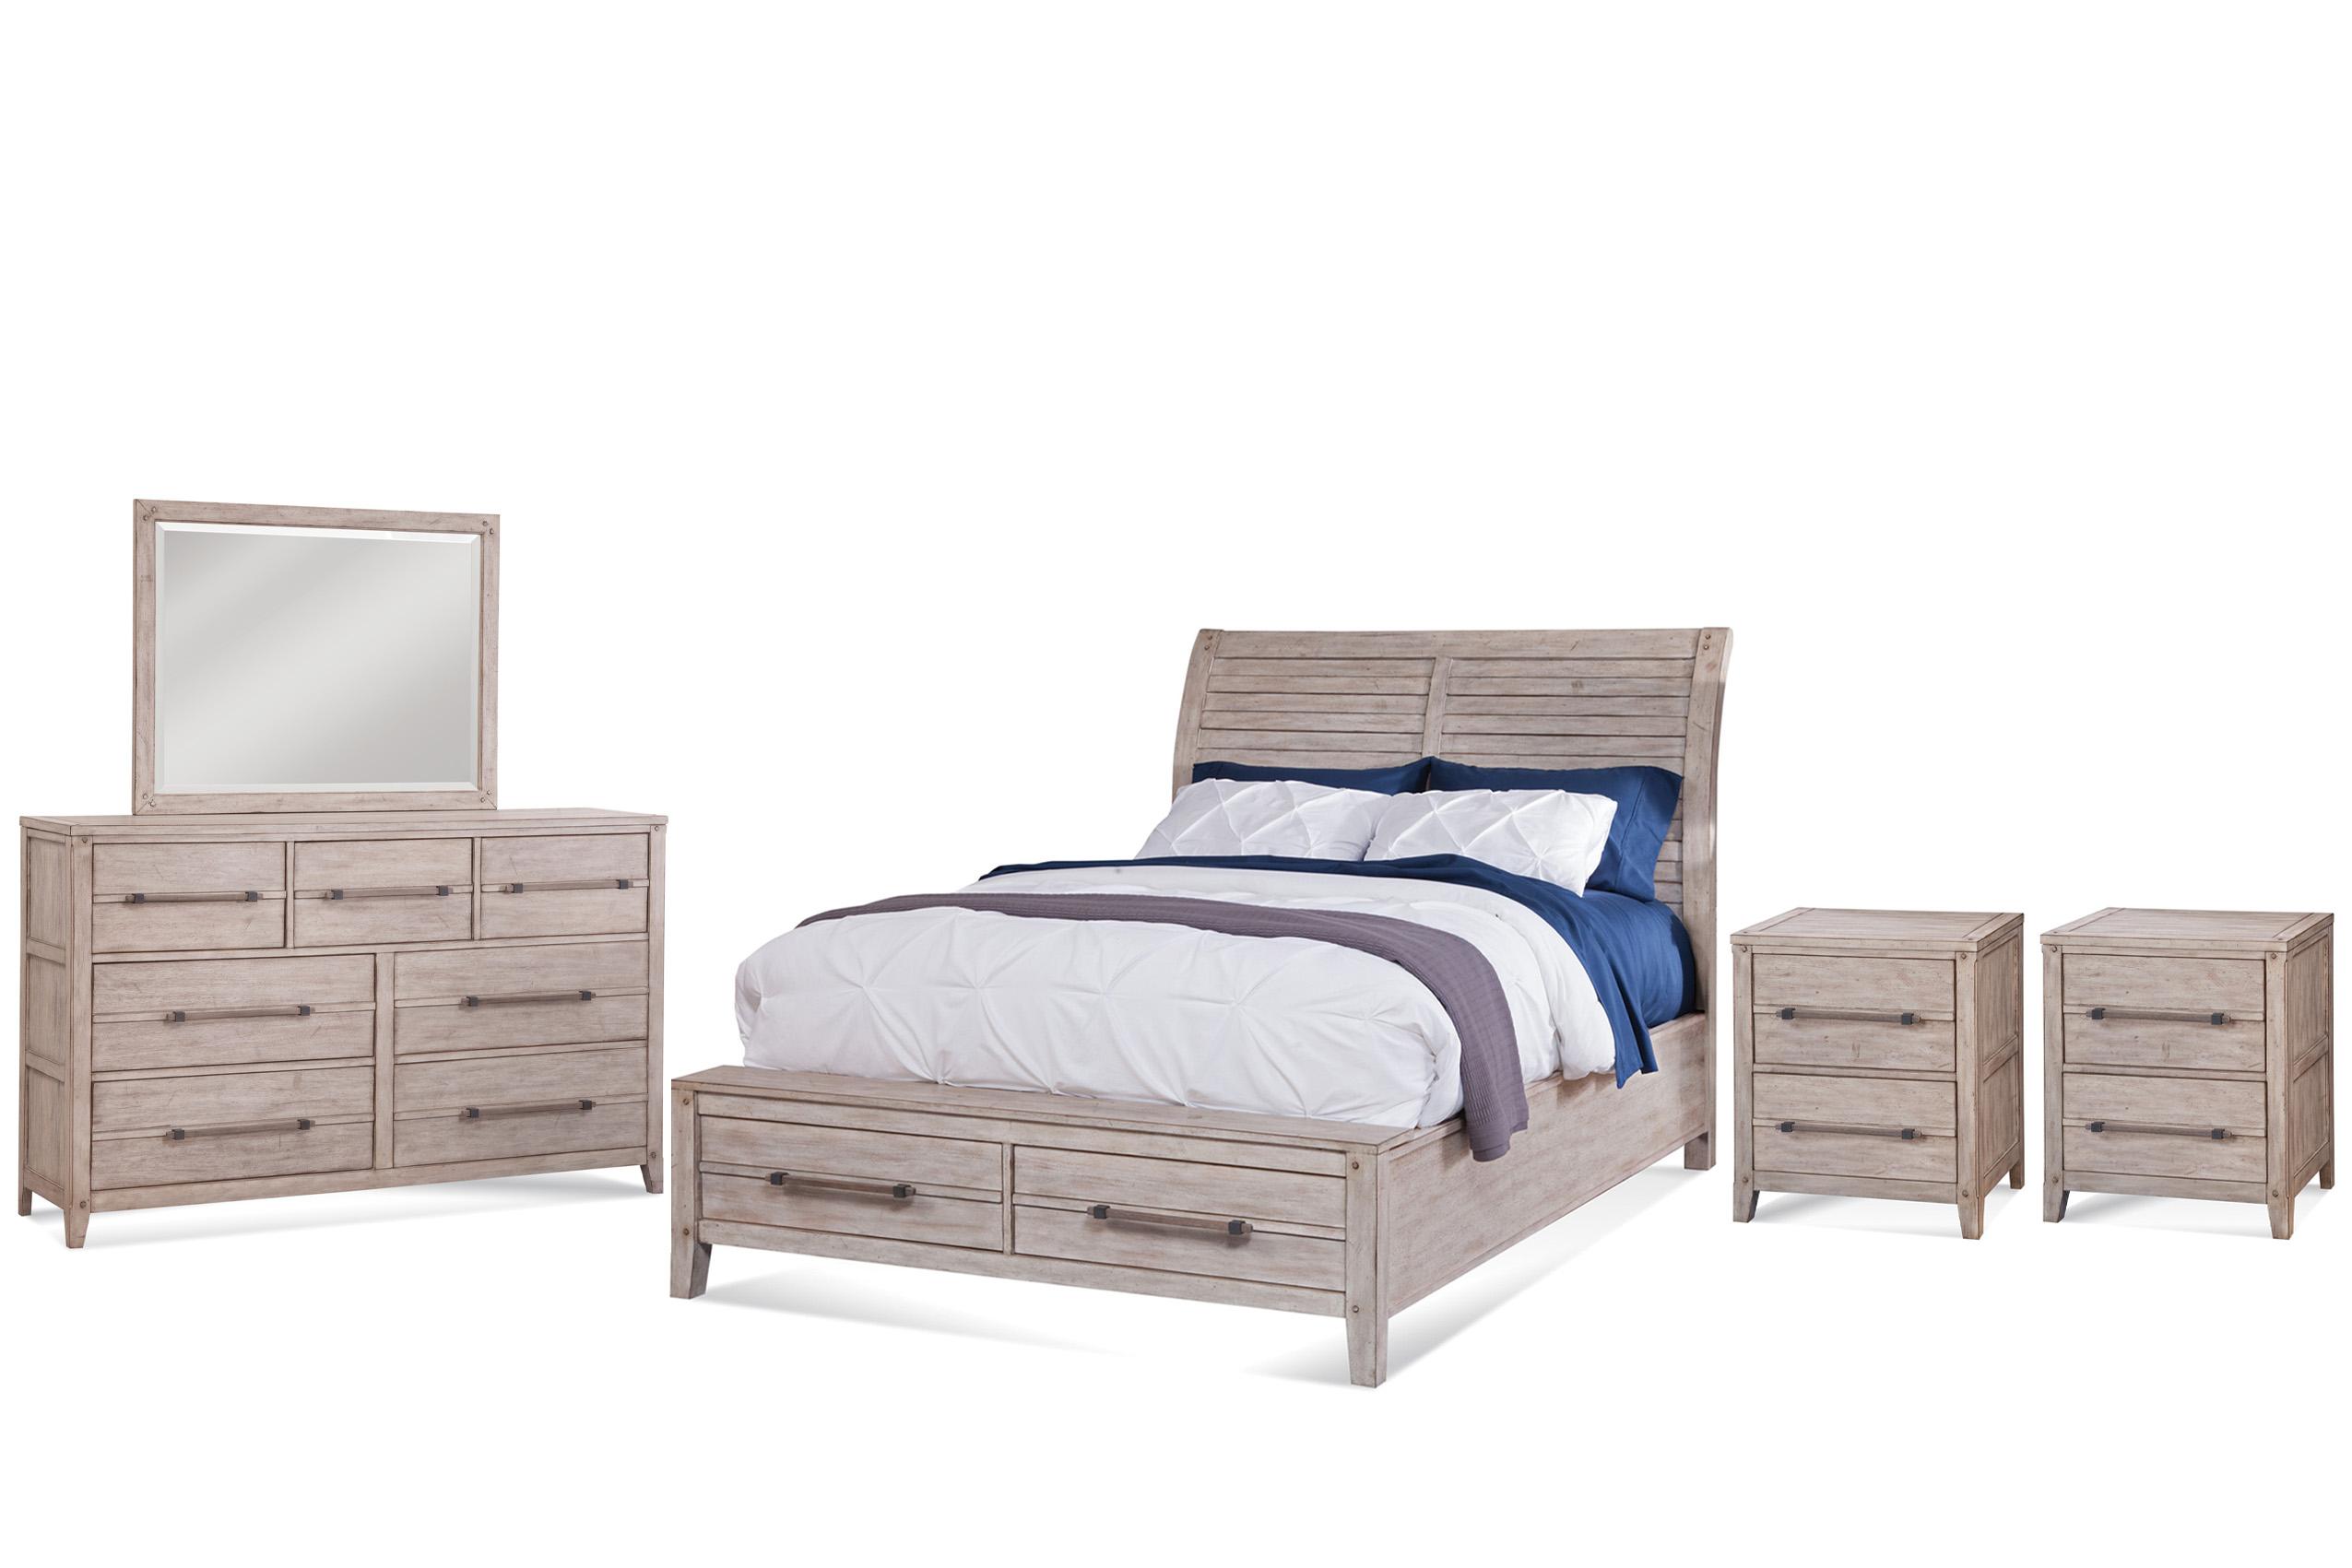 Classic, Traditional Sleigh Bedroom Set AURORA 2810-50PSB 2810-50PSB-2810-420-2NDM-5PC in whitewash 